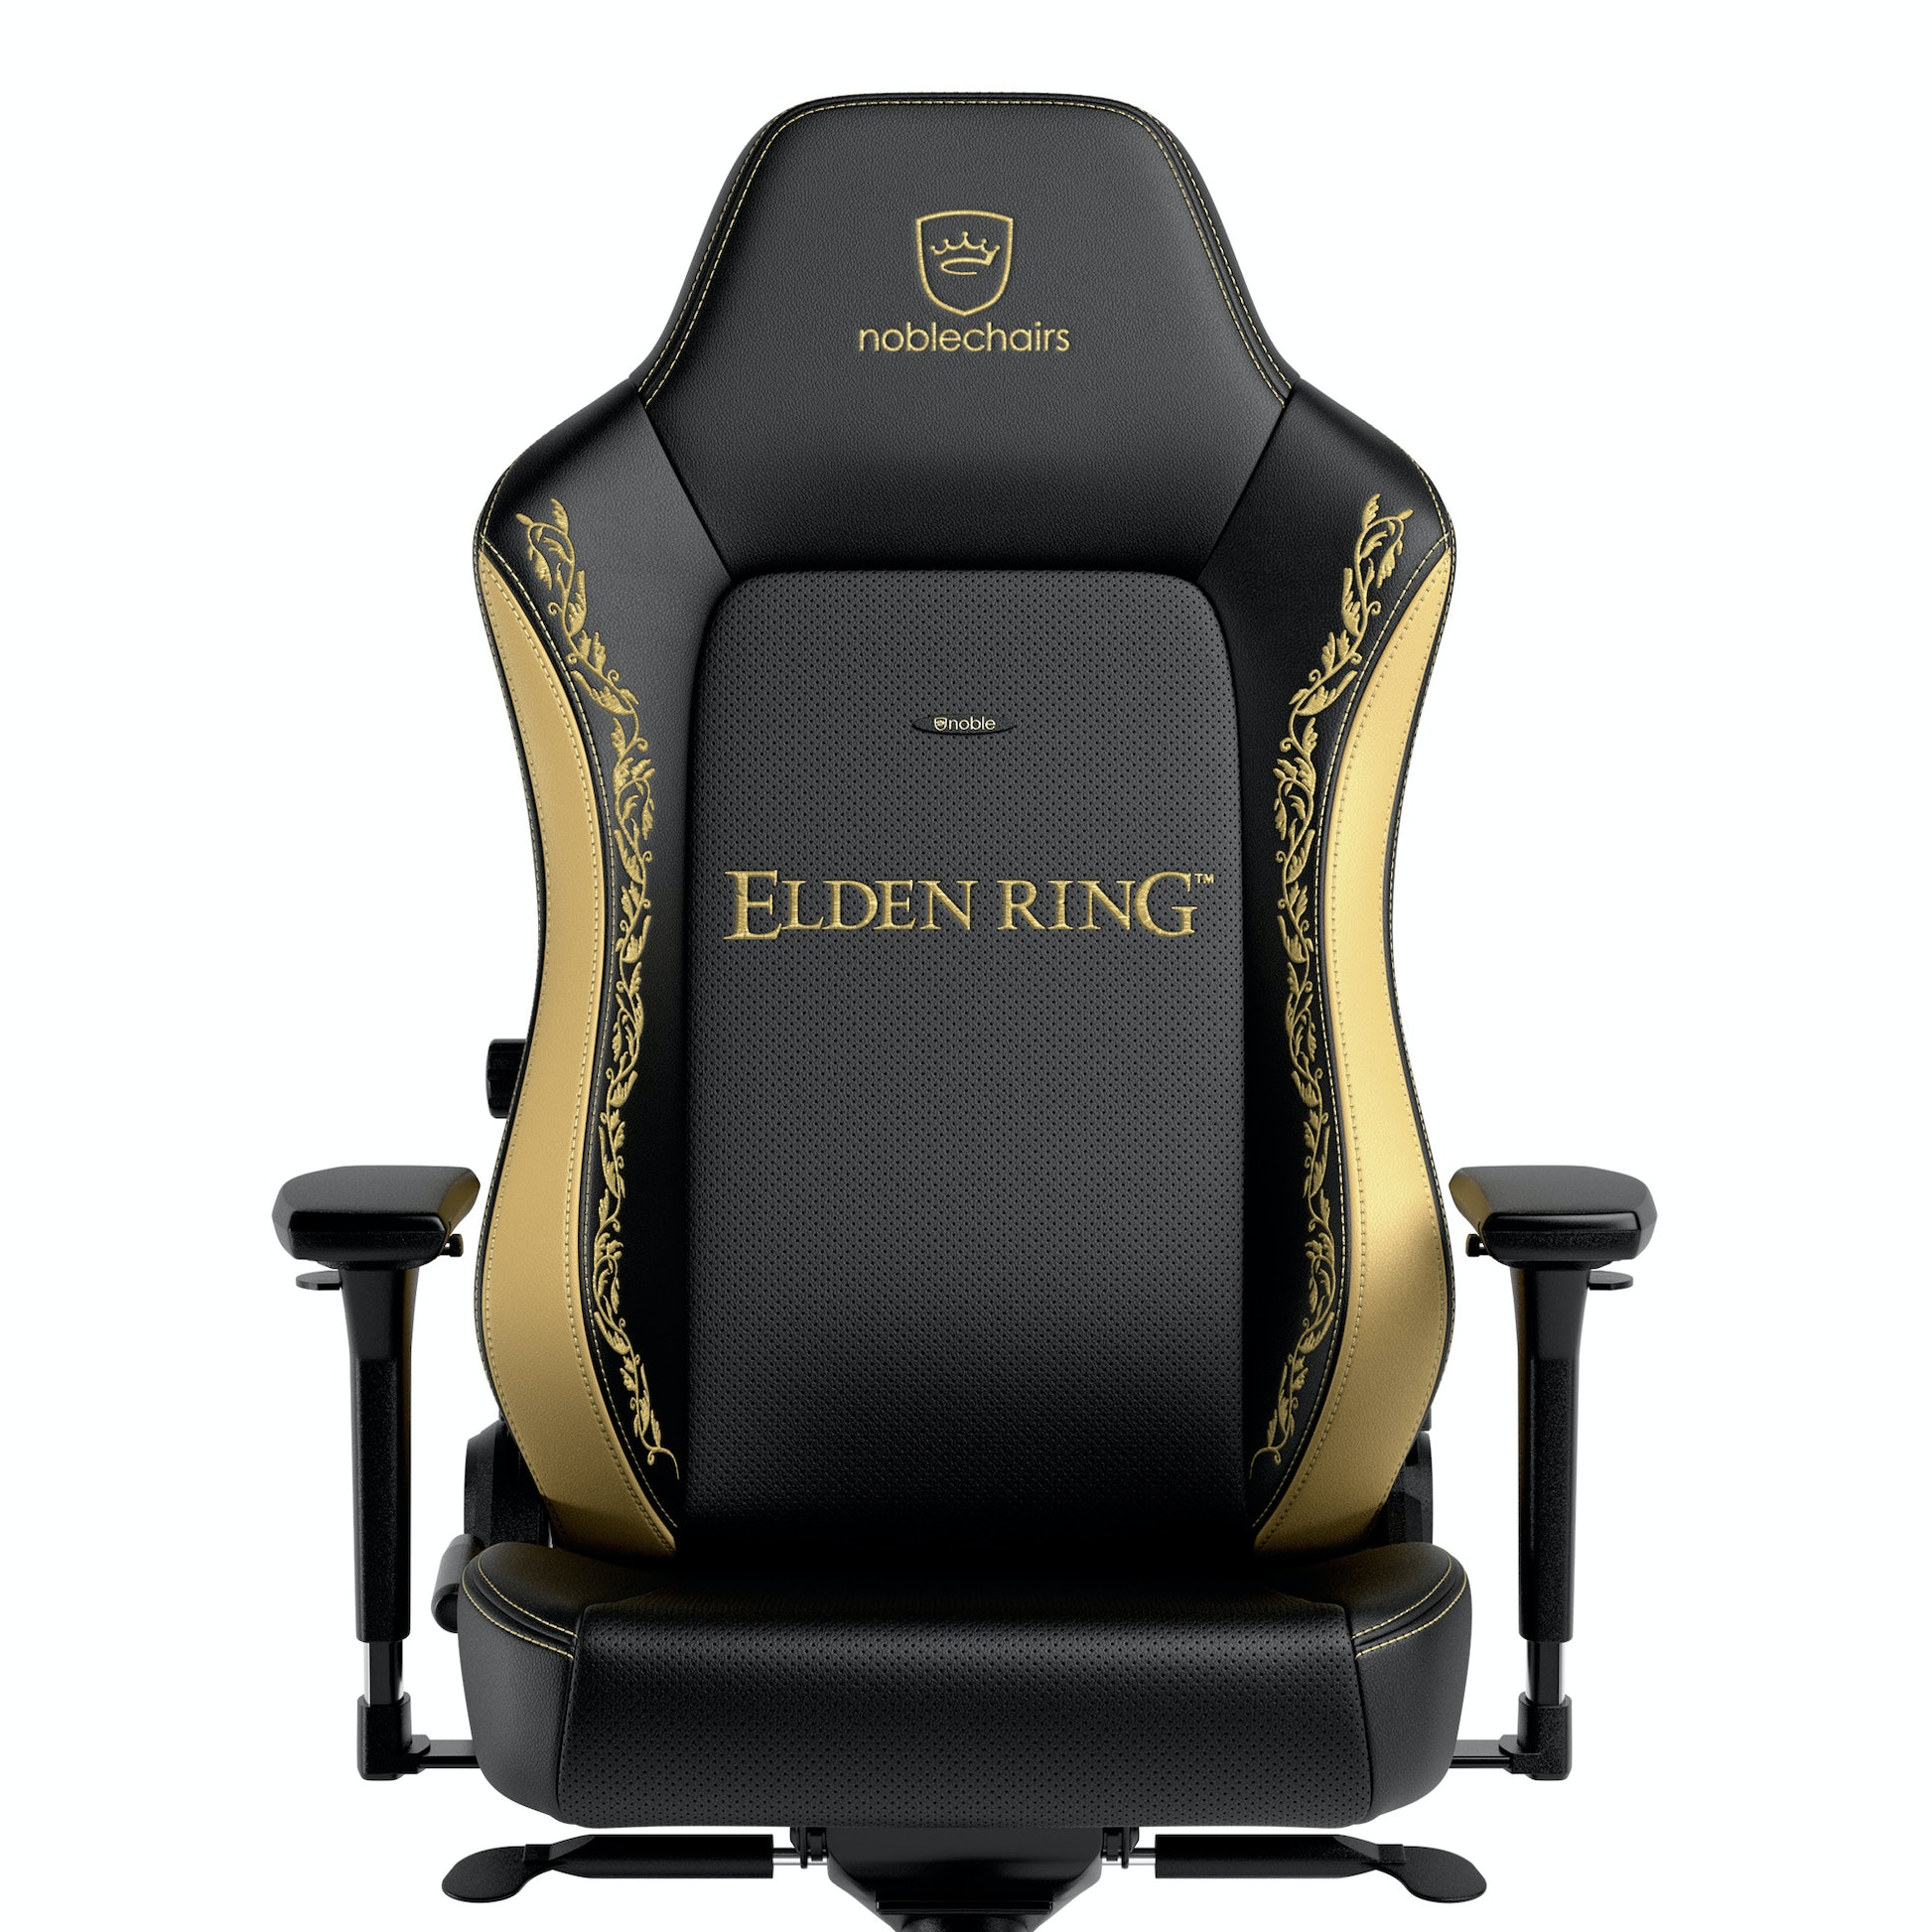 noblechairs - Cadeira noblechairs HERO - Elden Ring Edition